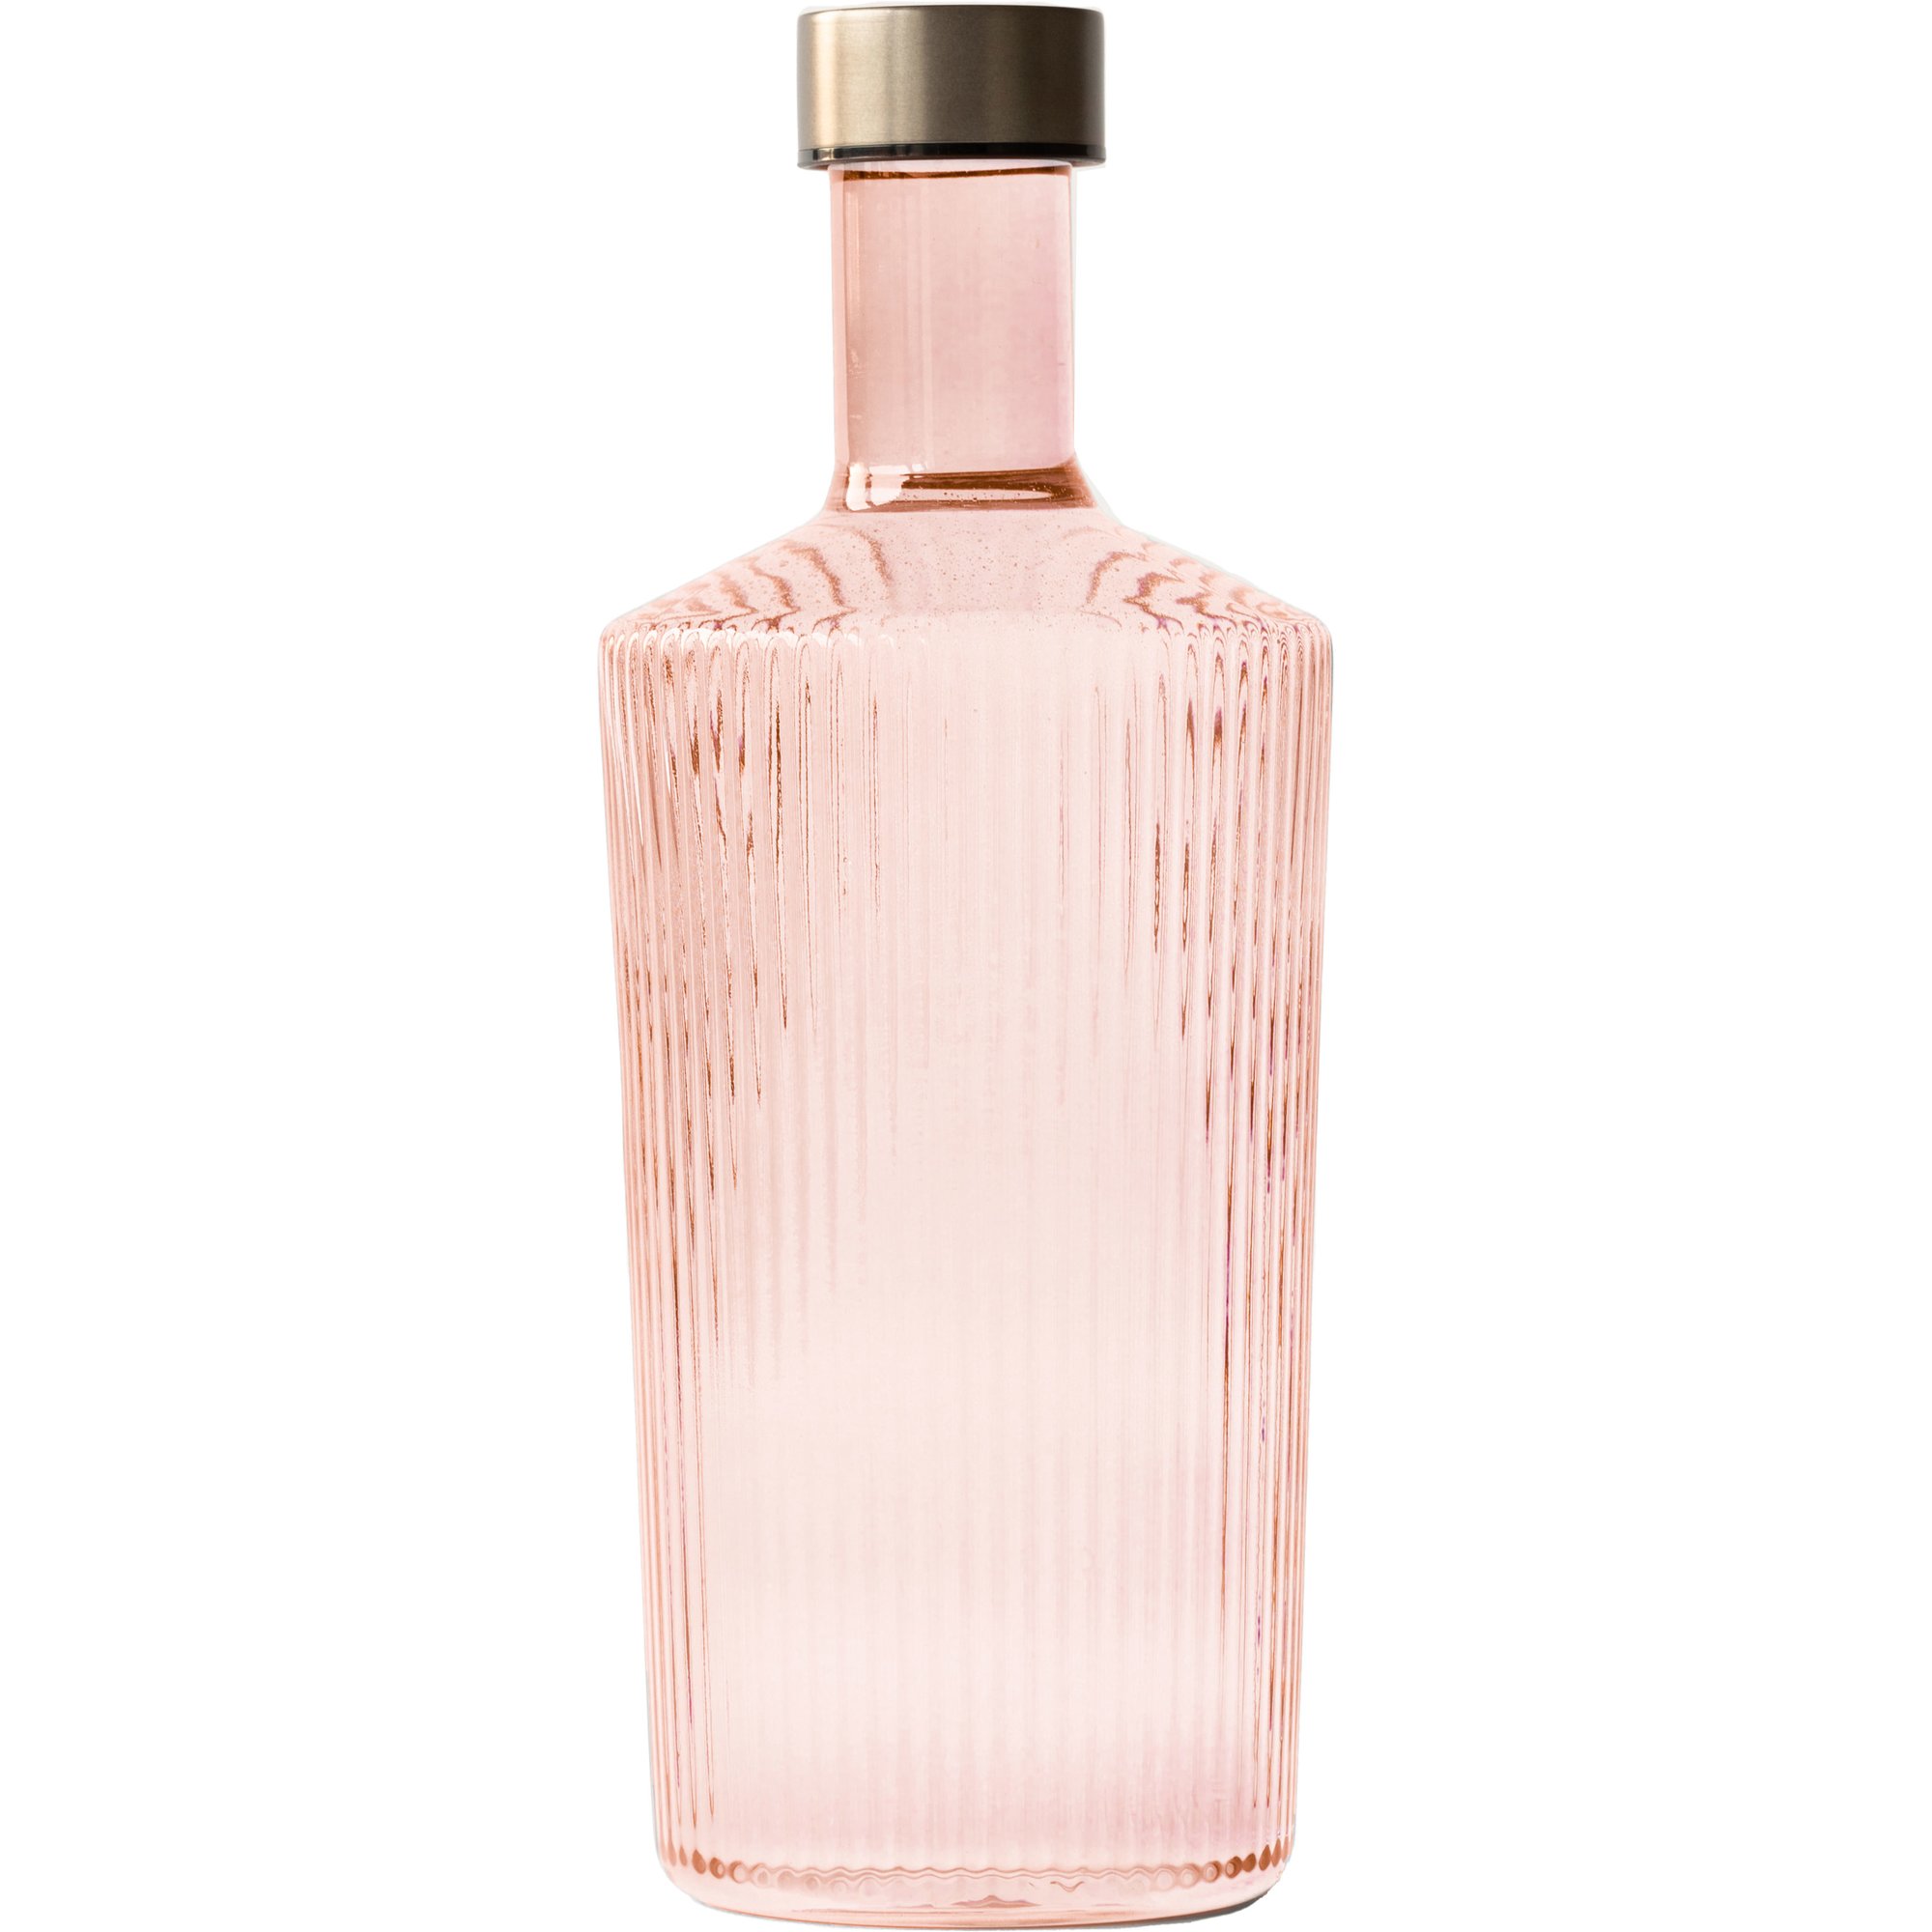 Paveau Pink vannflaske, 1,25 liter, rosa Vannflaske